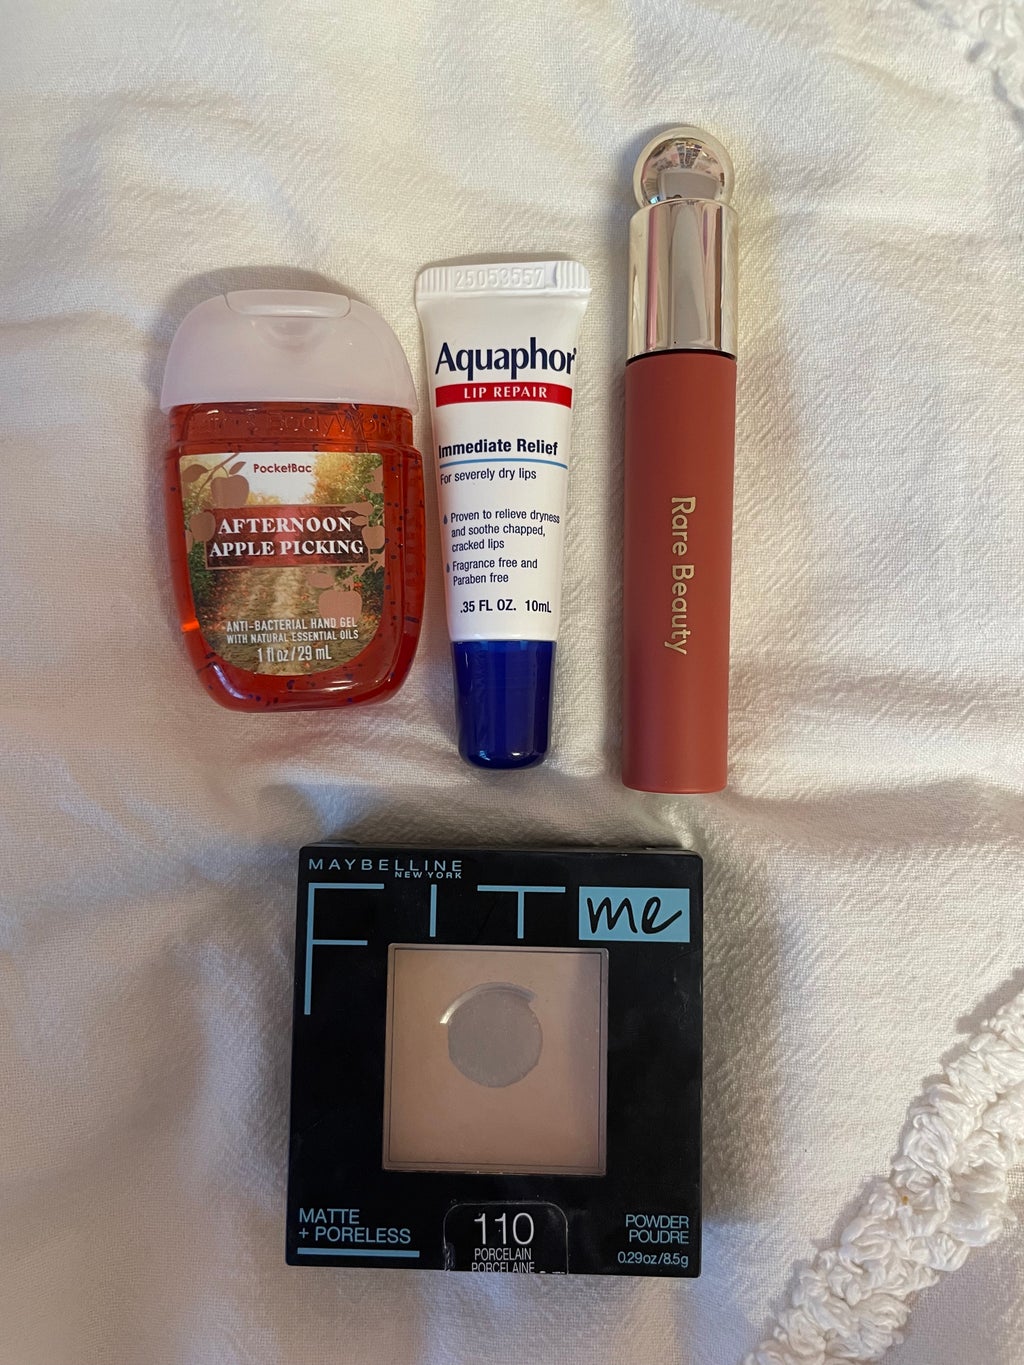 hand sanitizer, lip gloss, face powder, and aquaphor lip balm